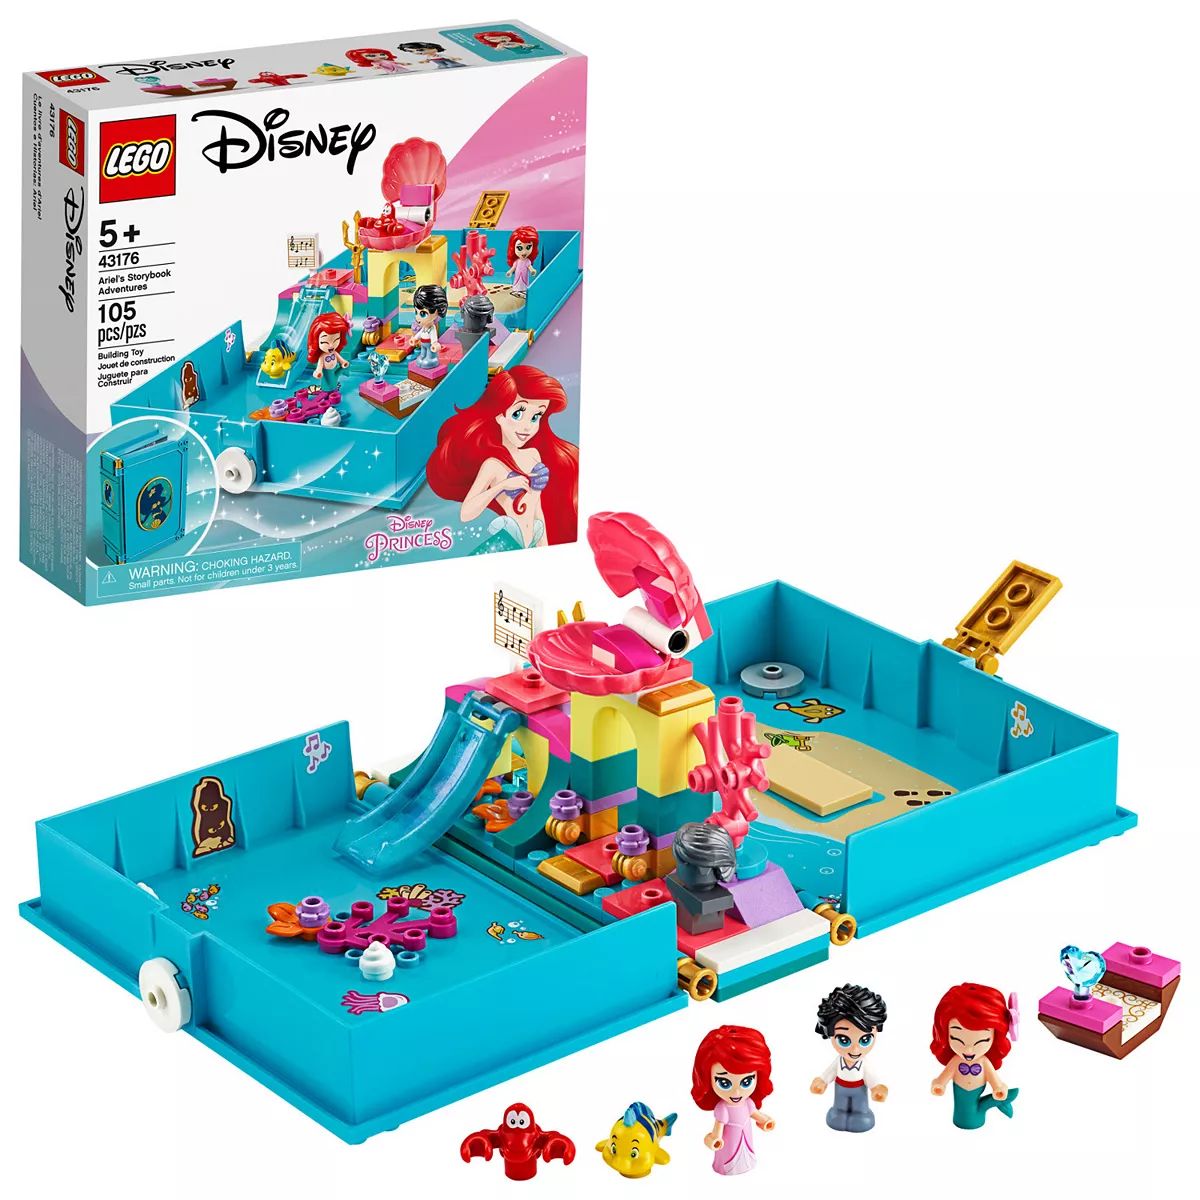 Disney's Little Mermaid Ariel's Storybook Adventures 43176 Creative Building Kit by LEGO | Kohl's